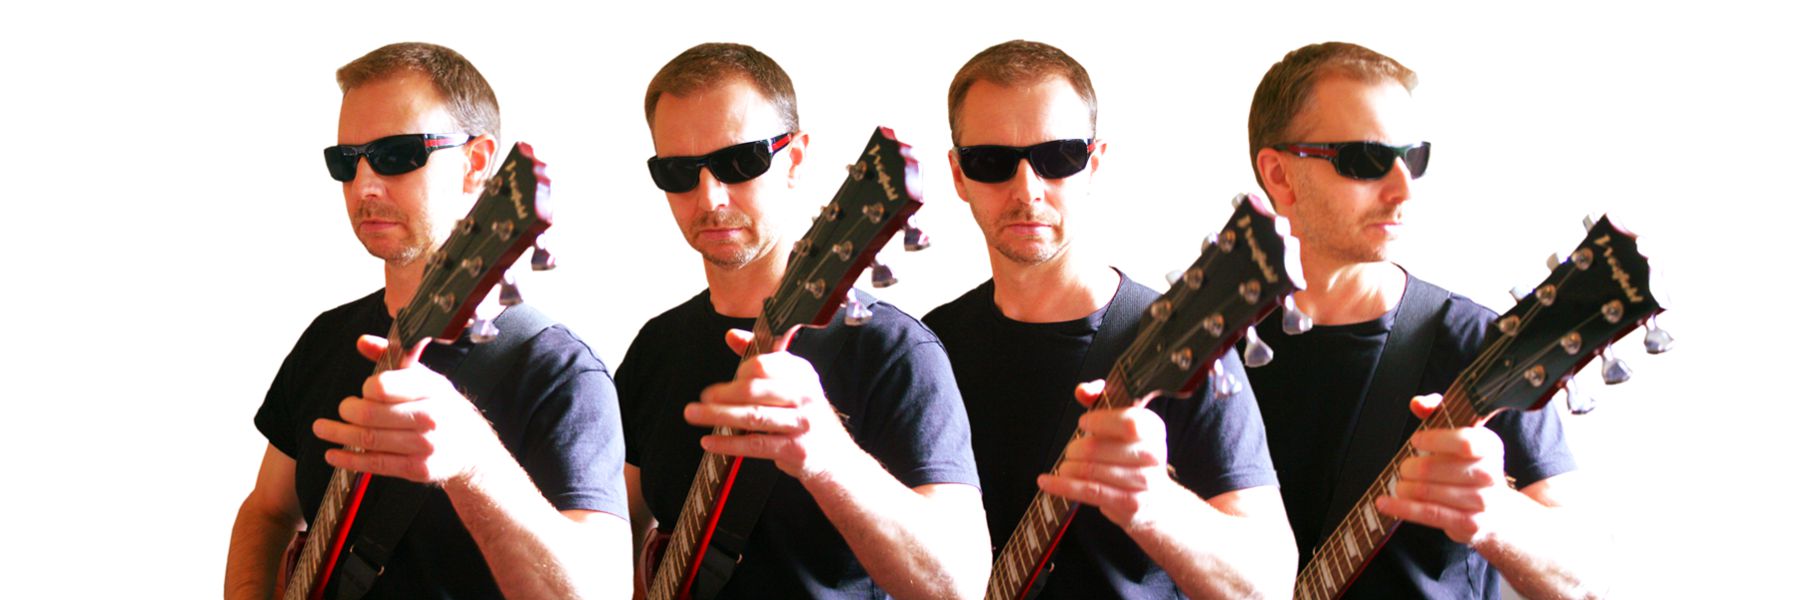 dfxmusic david fox producer portrait guitar